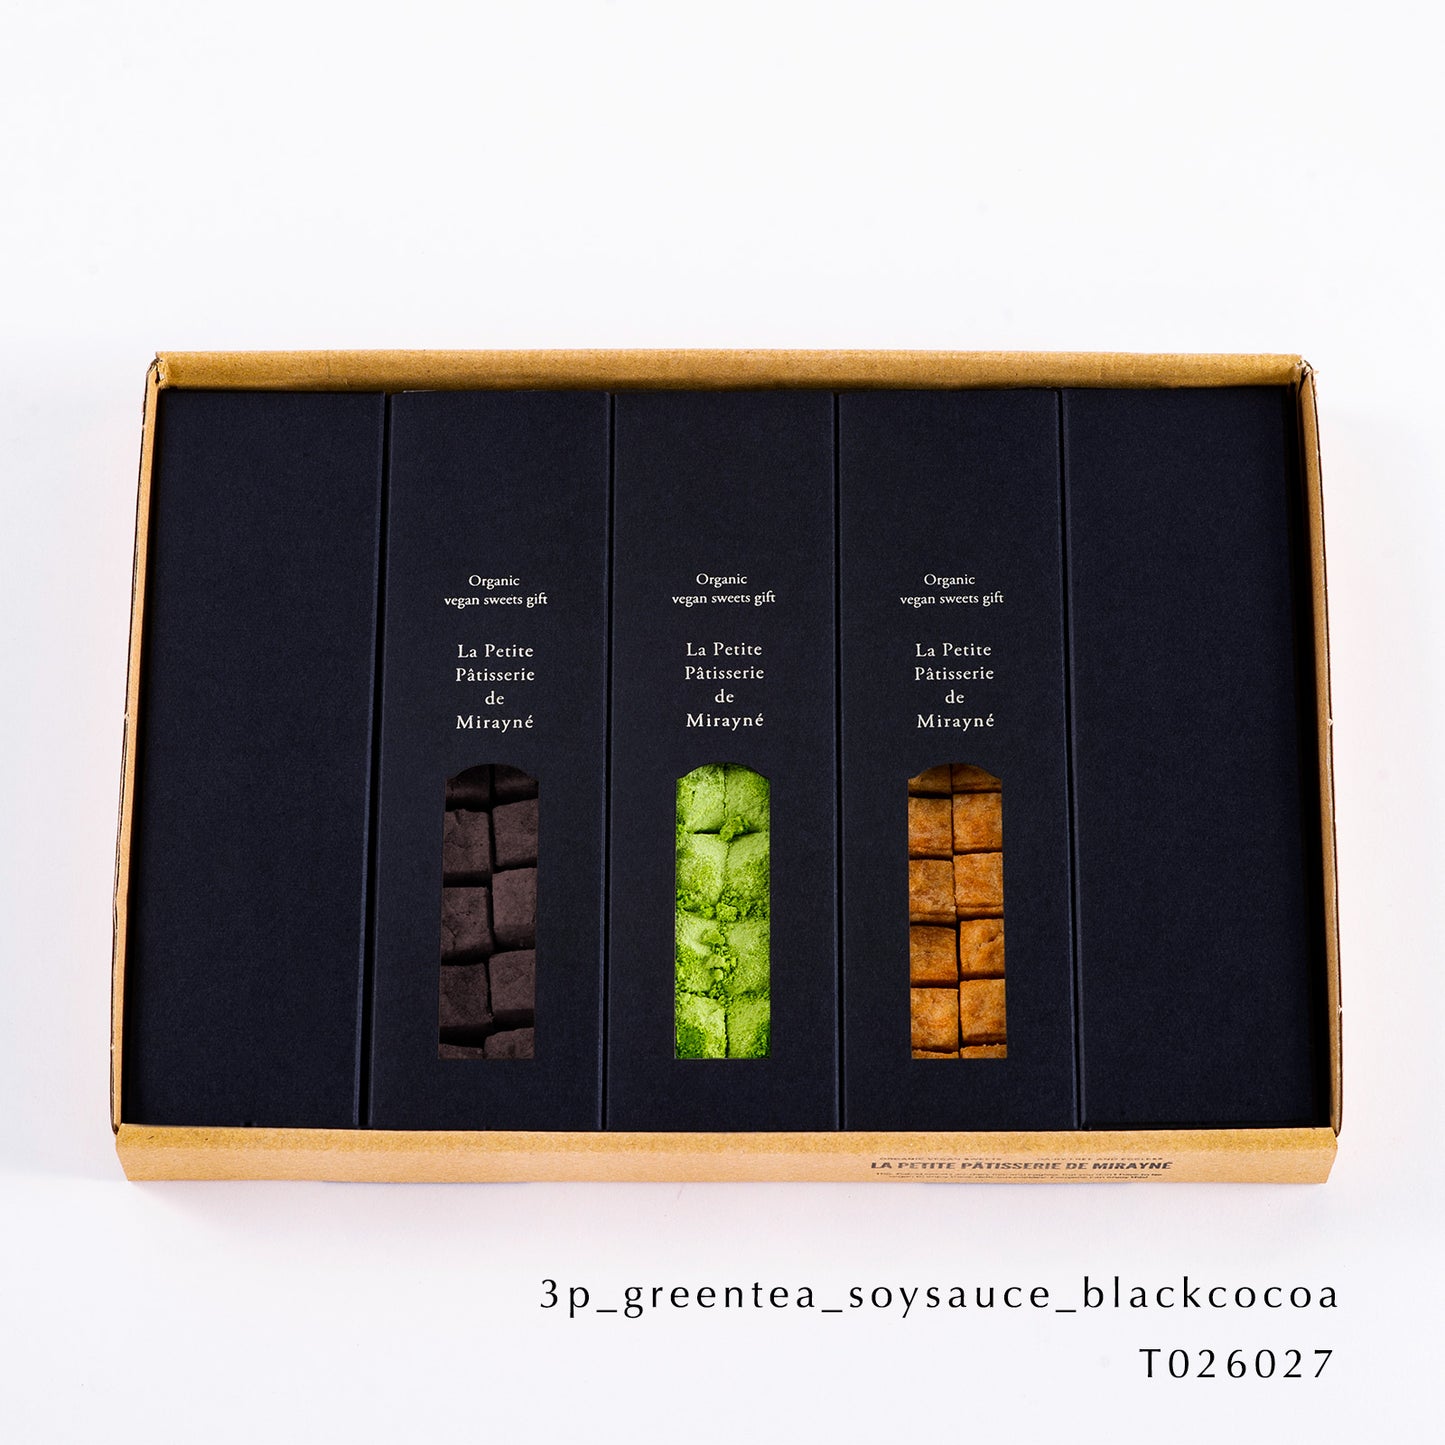 3p_greentea_soysauce_blackcocoa